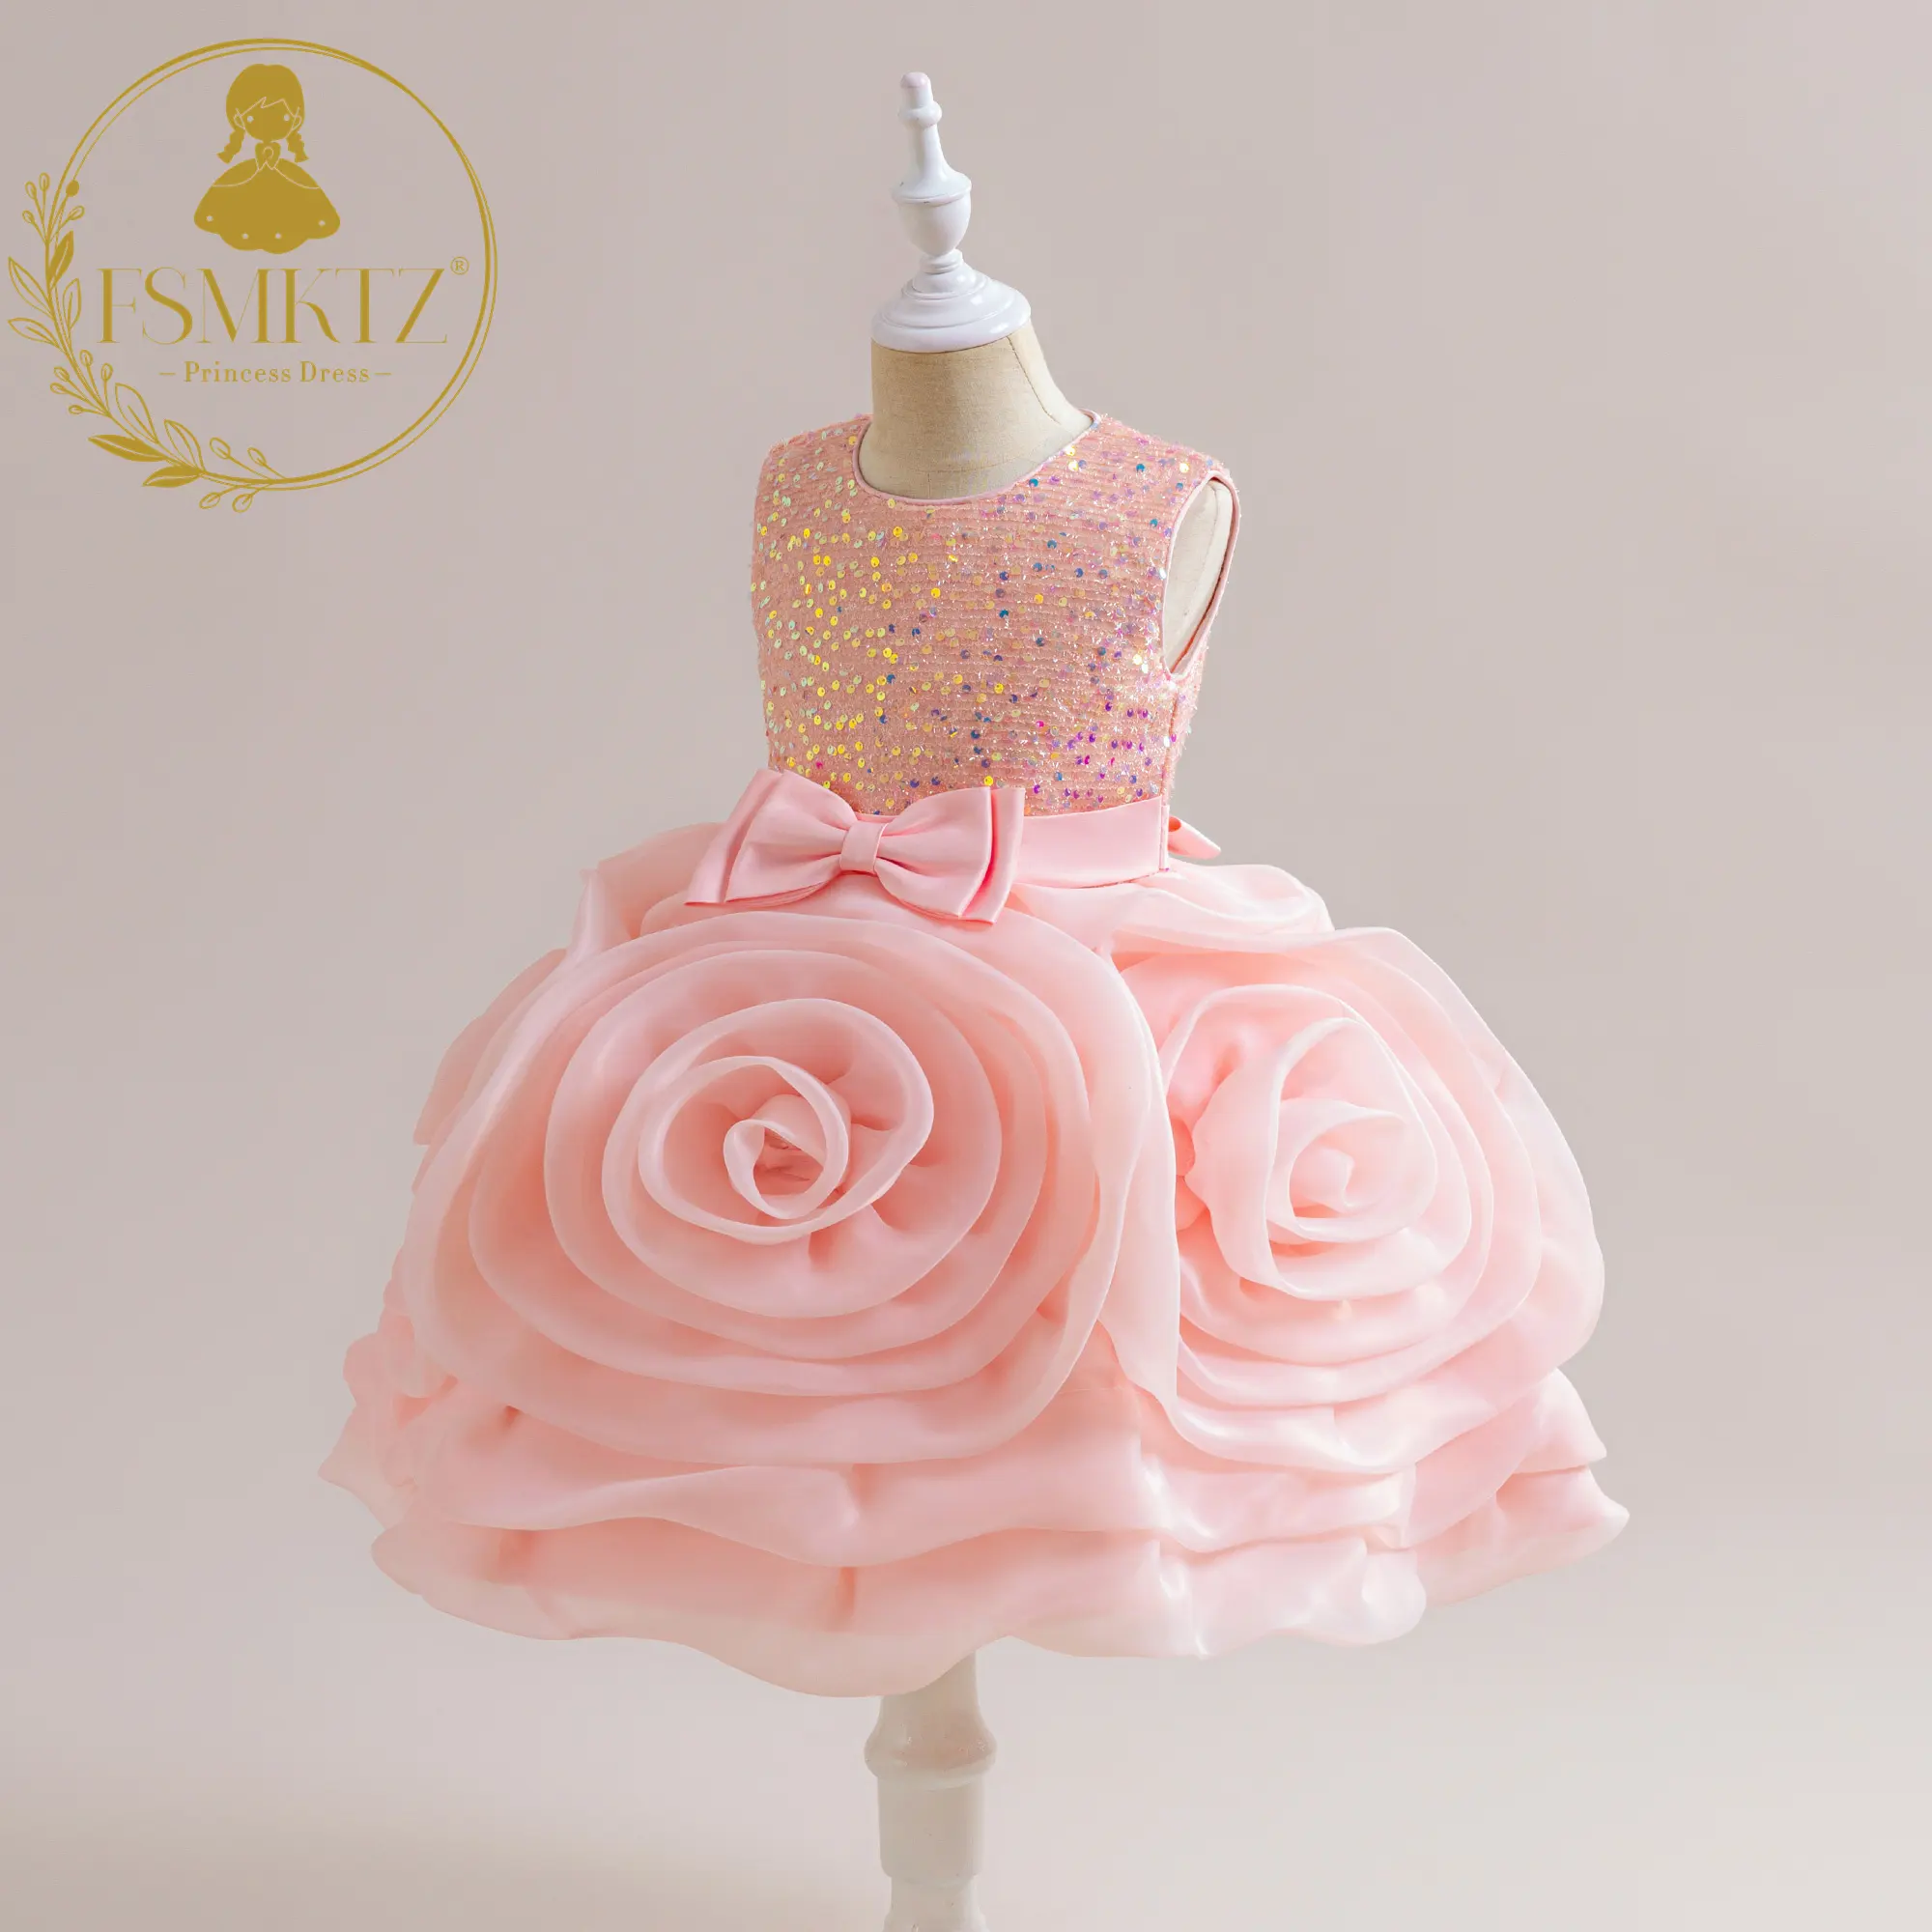 FSMKTZ Latest Dress For Girls Puffy Flower Sequins Girls Dress Sweet Girls Birthday Party Clothing For Kids Formal Wear